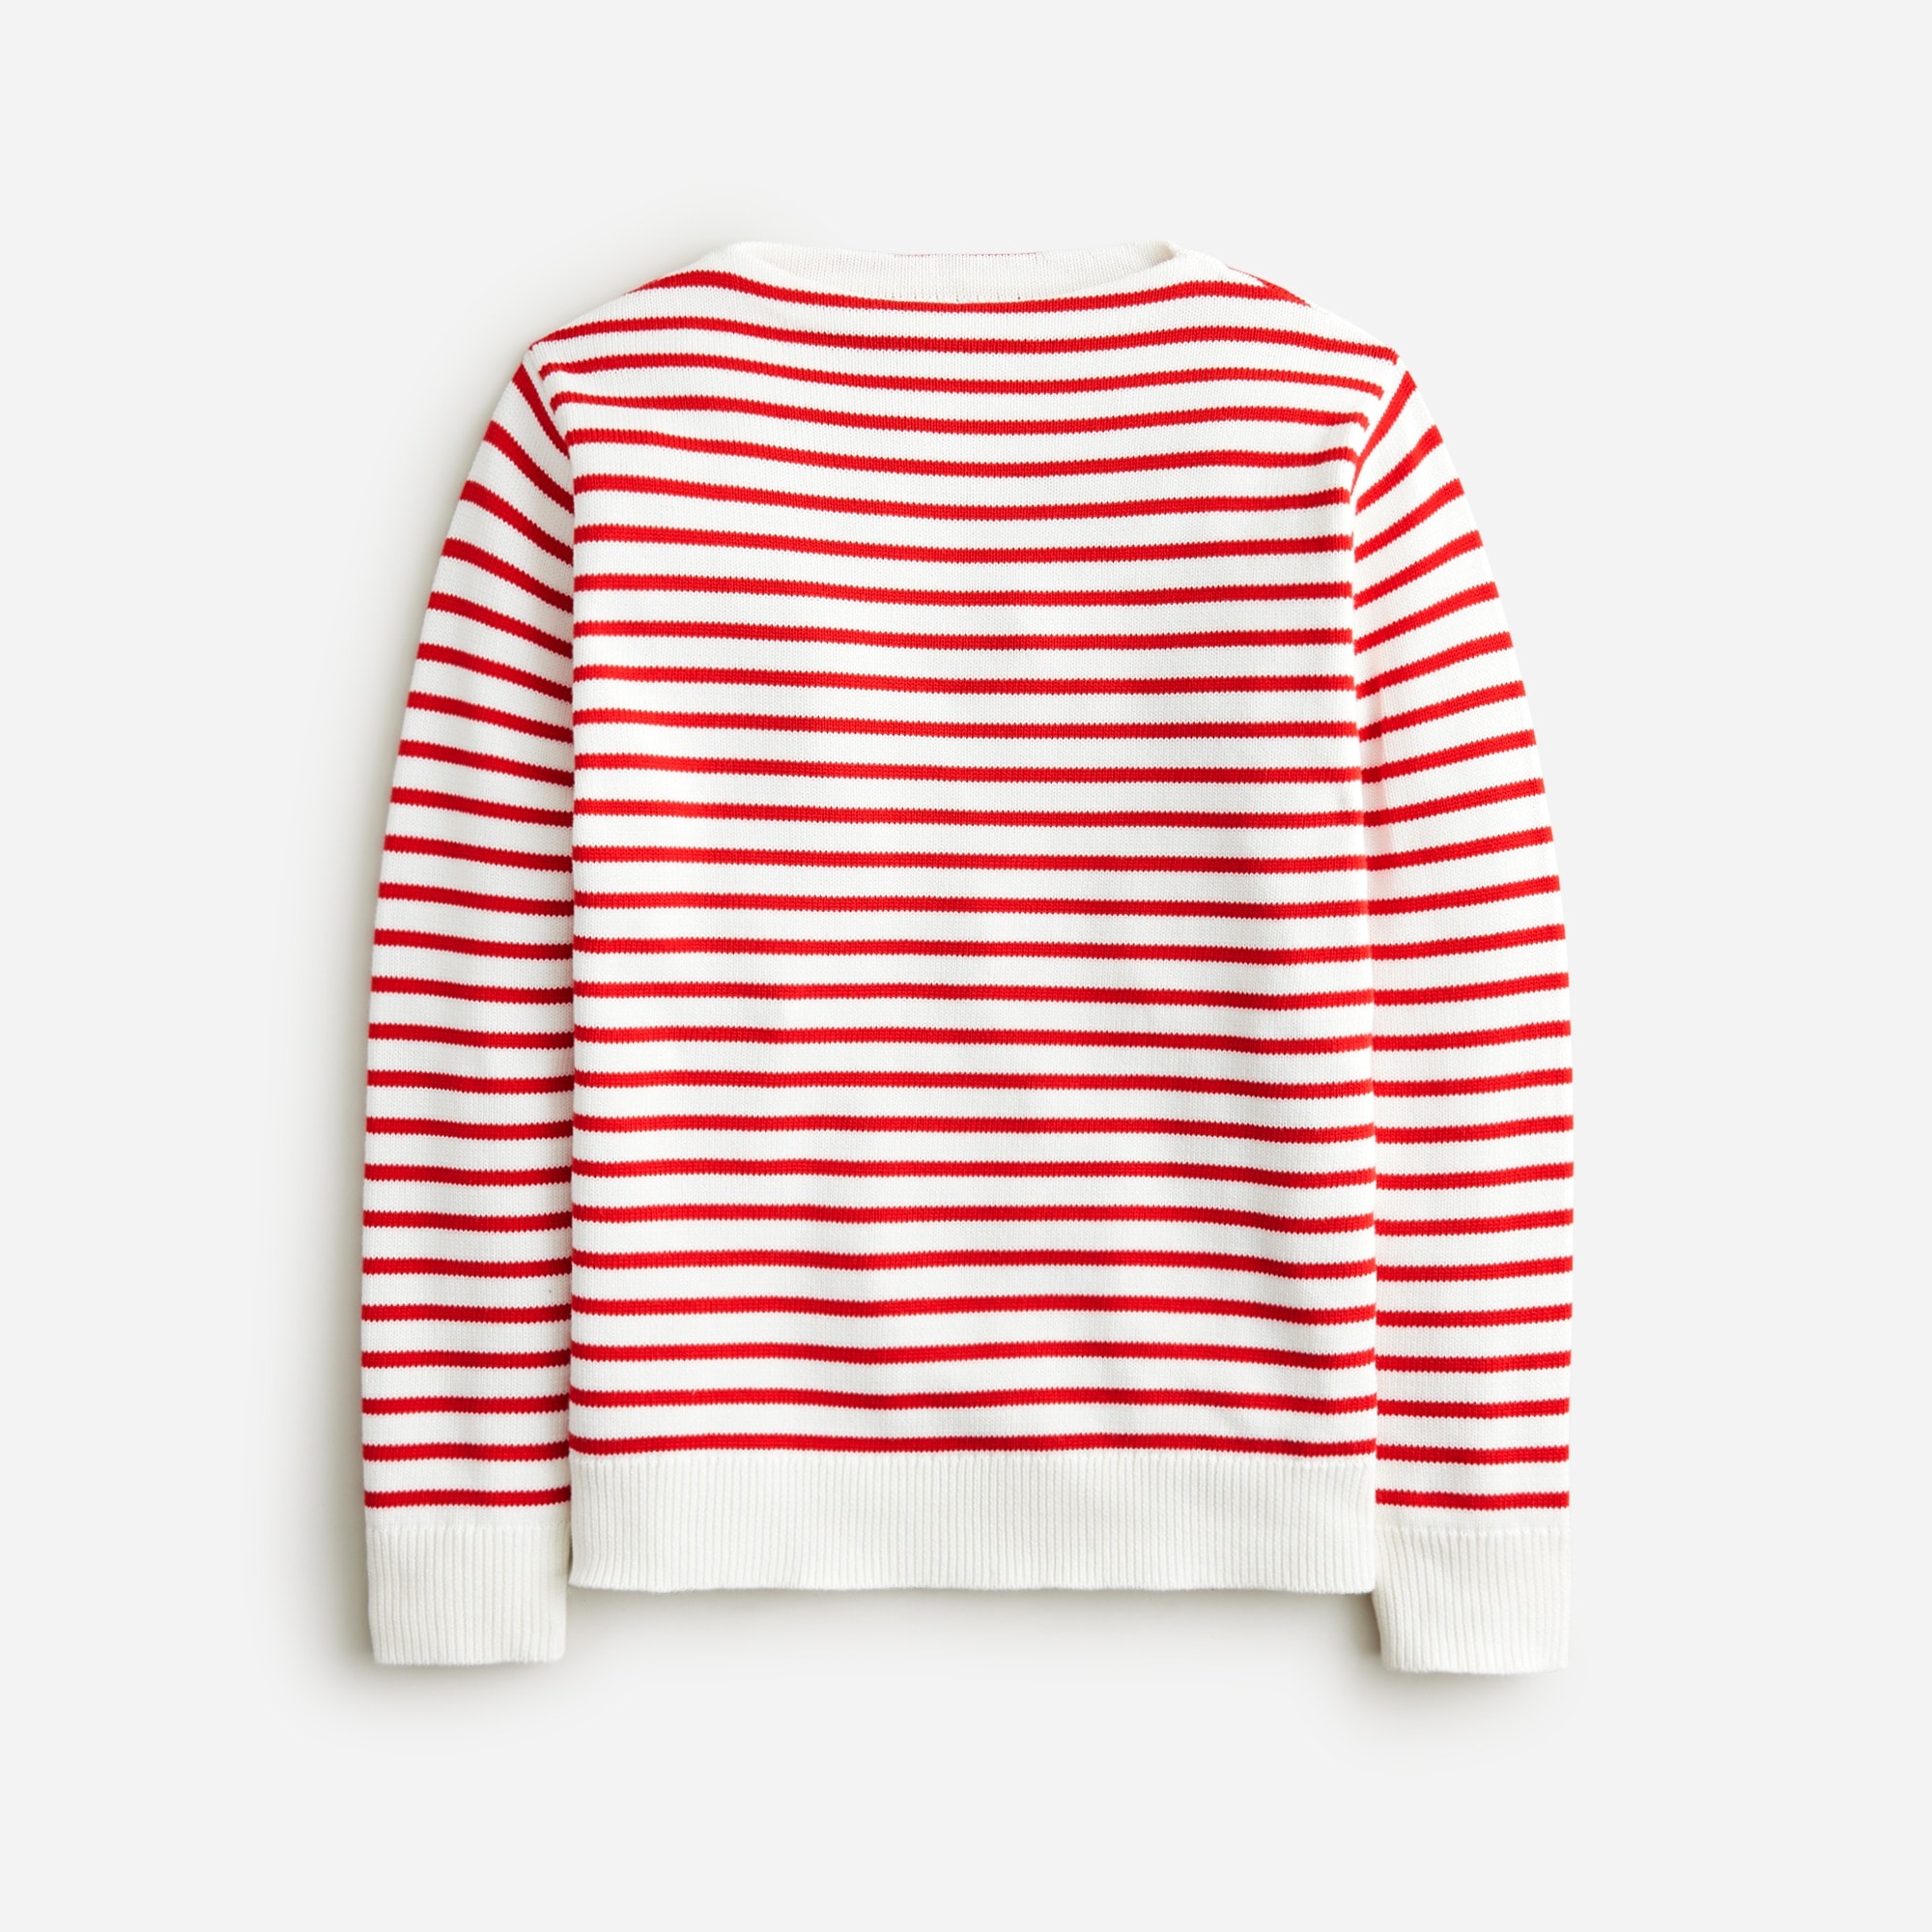  Cotton boatneck sweater in stripe